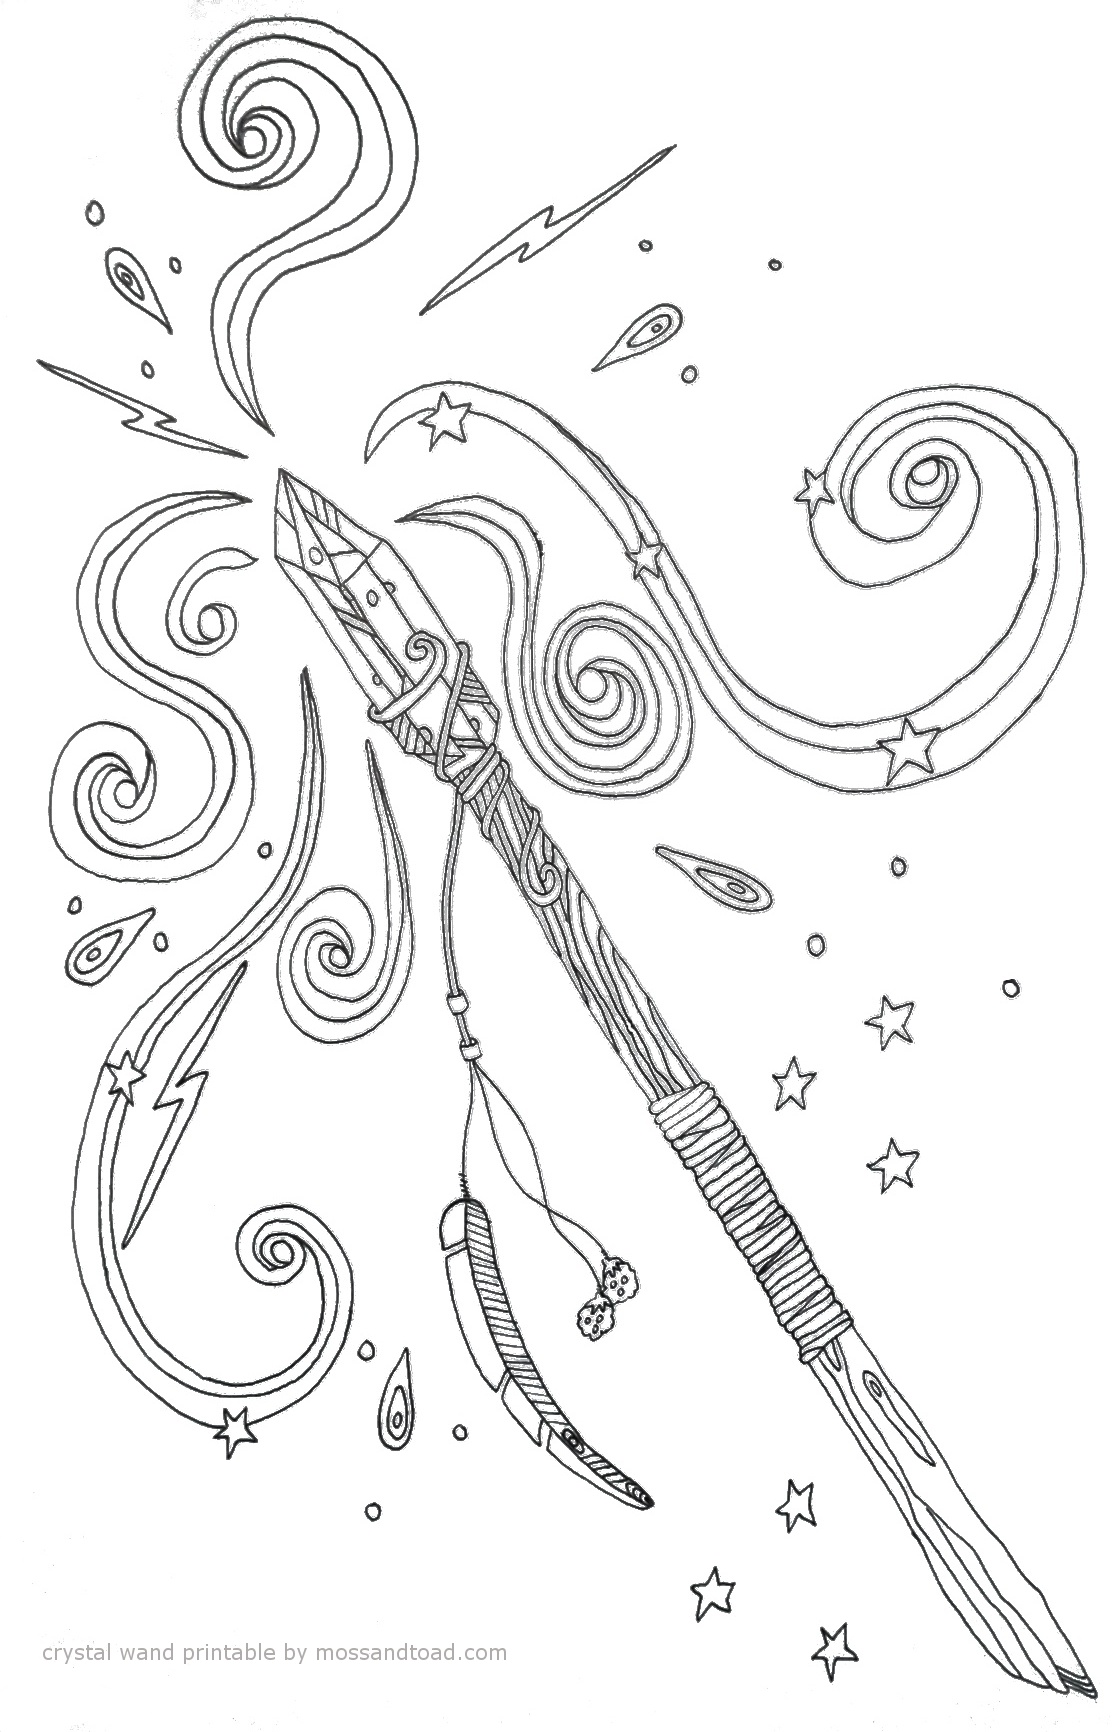 wand-drawing-at-getdrawings-free-download